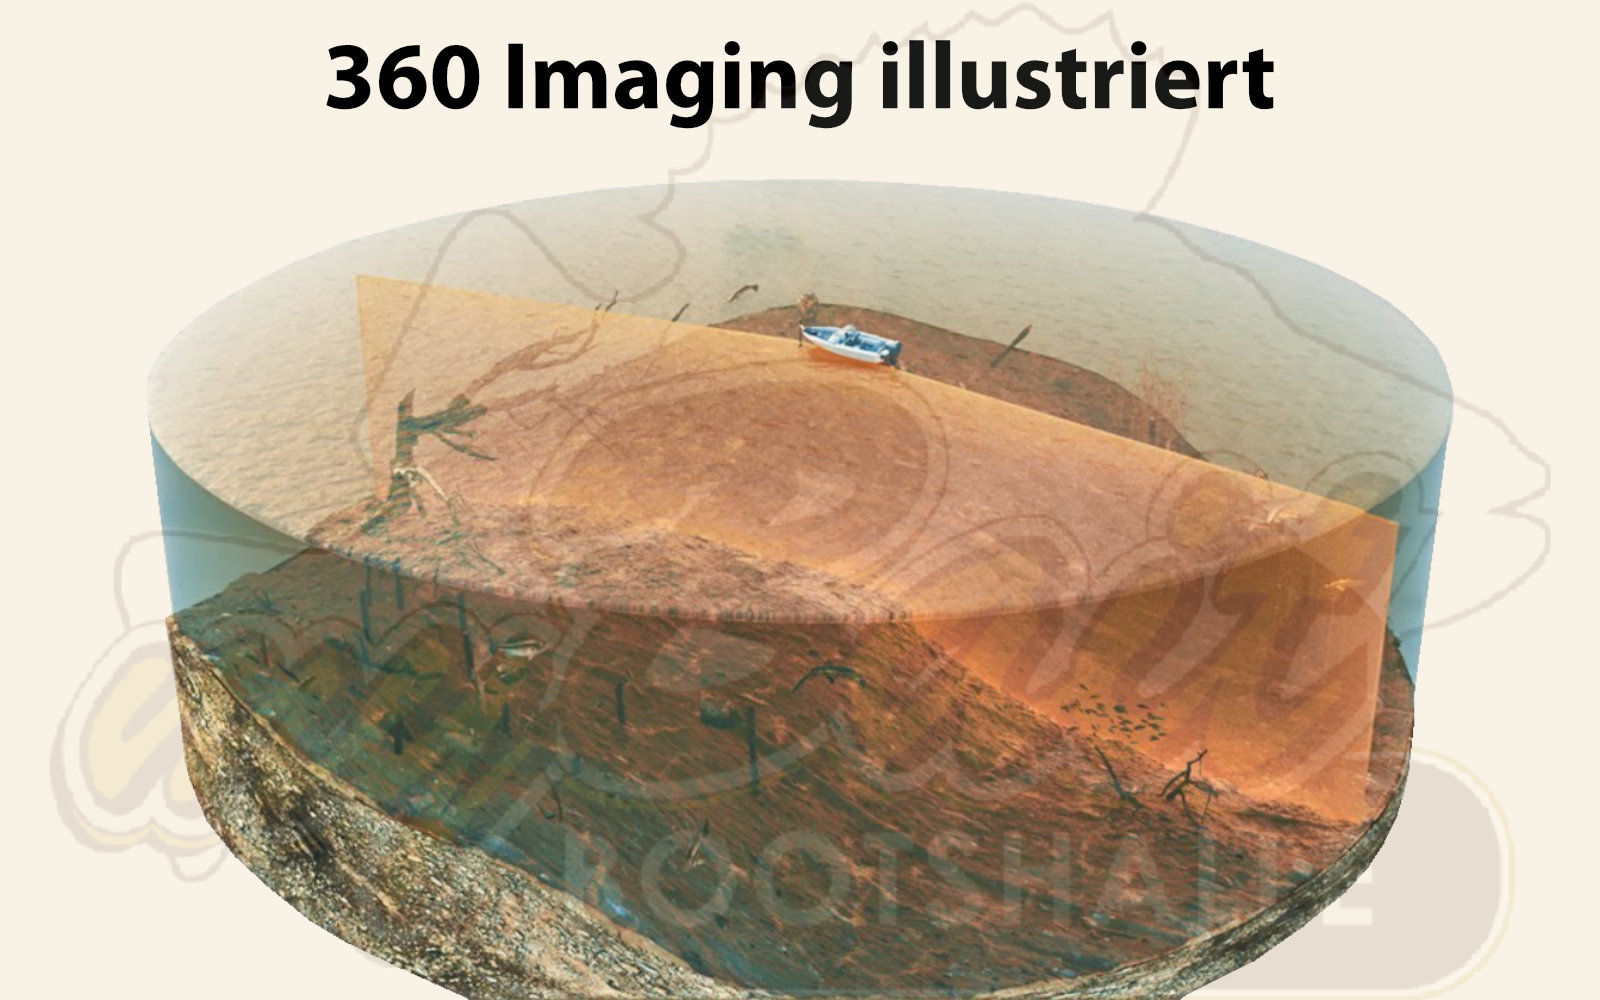 Funktionsweise des 360 Imaging illustriert